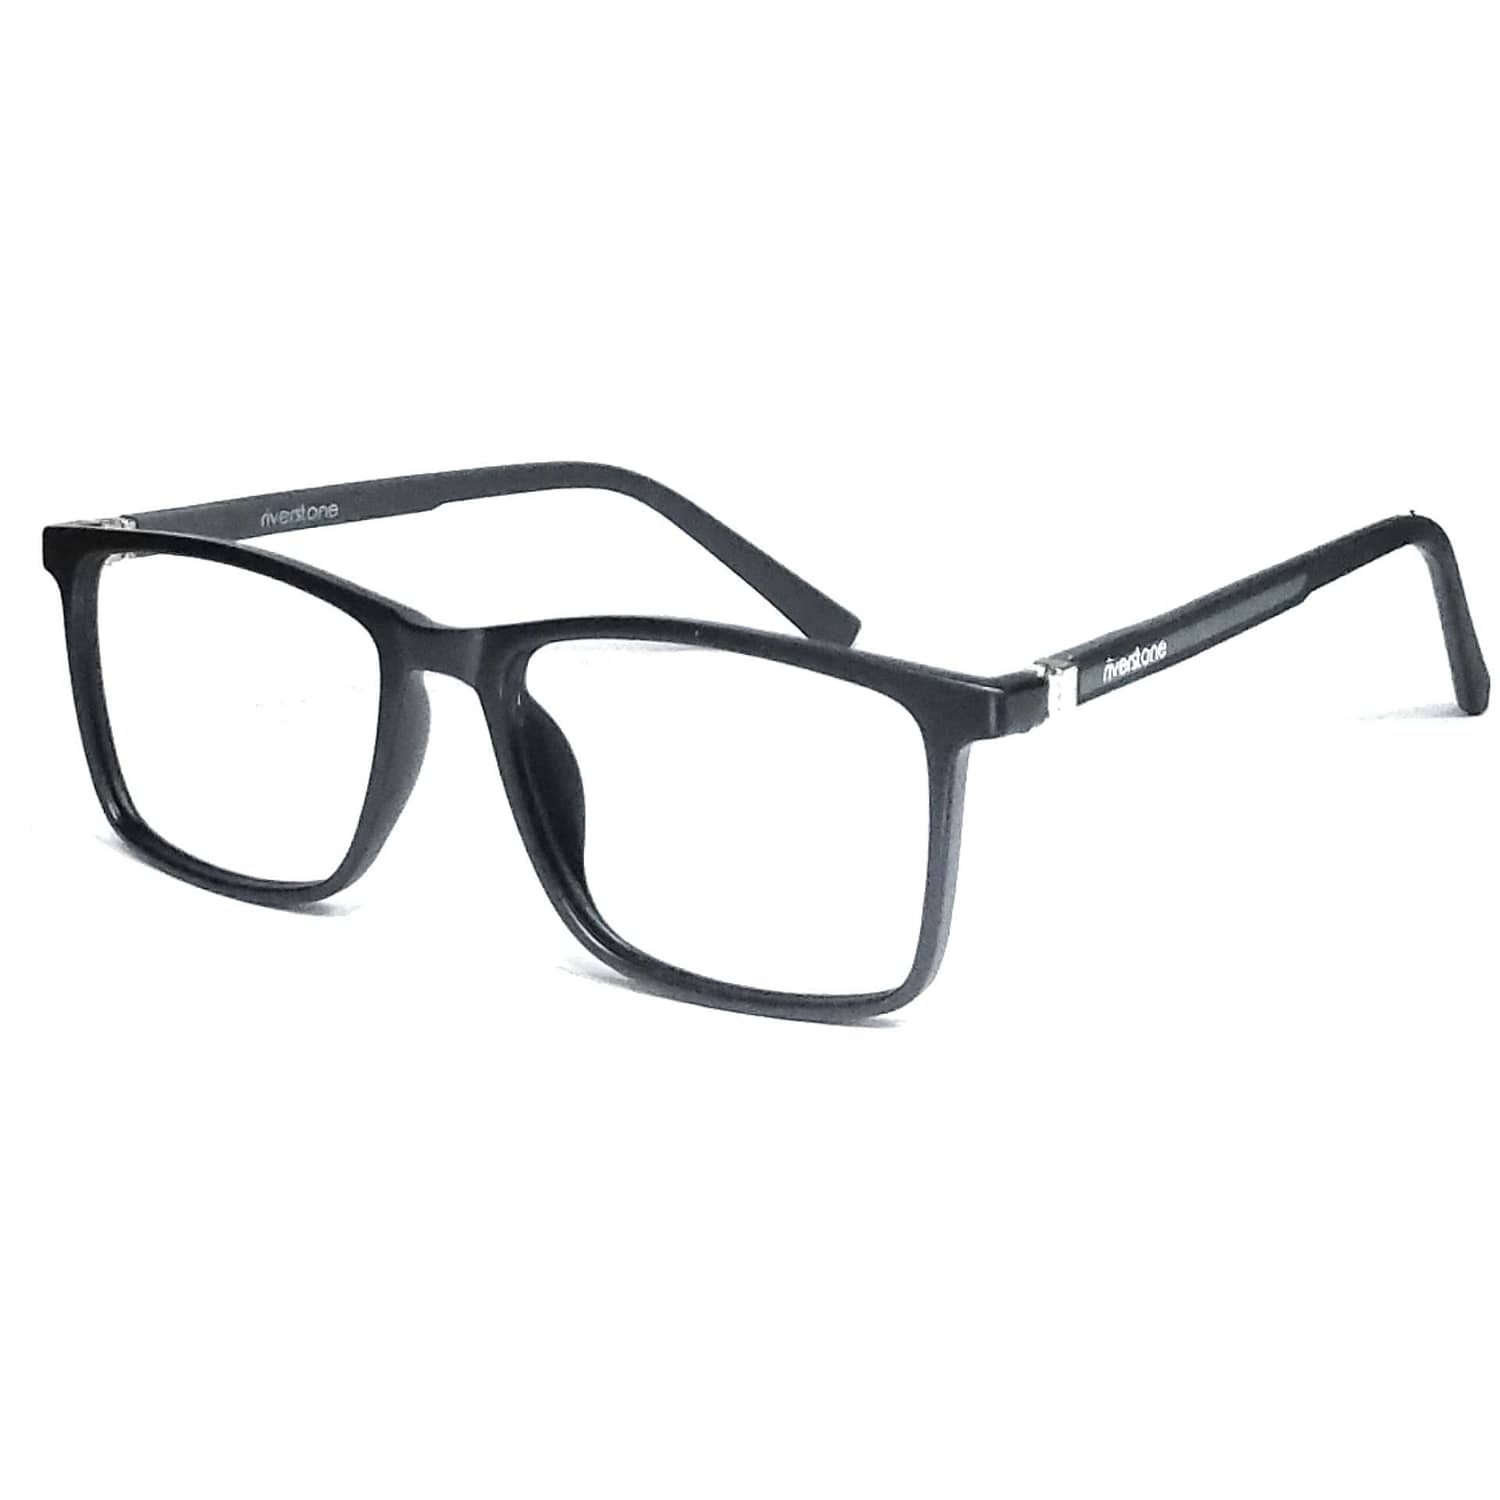 Riverstone Black TR90 Medium Eyeglass Frame